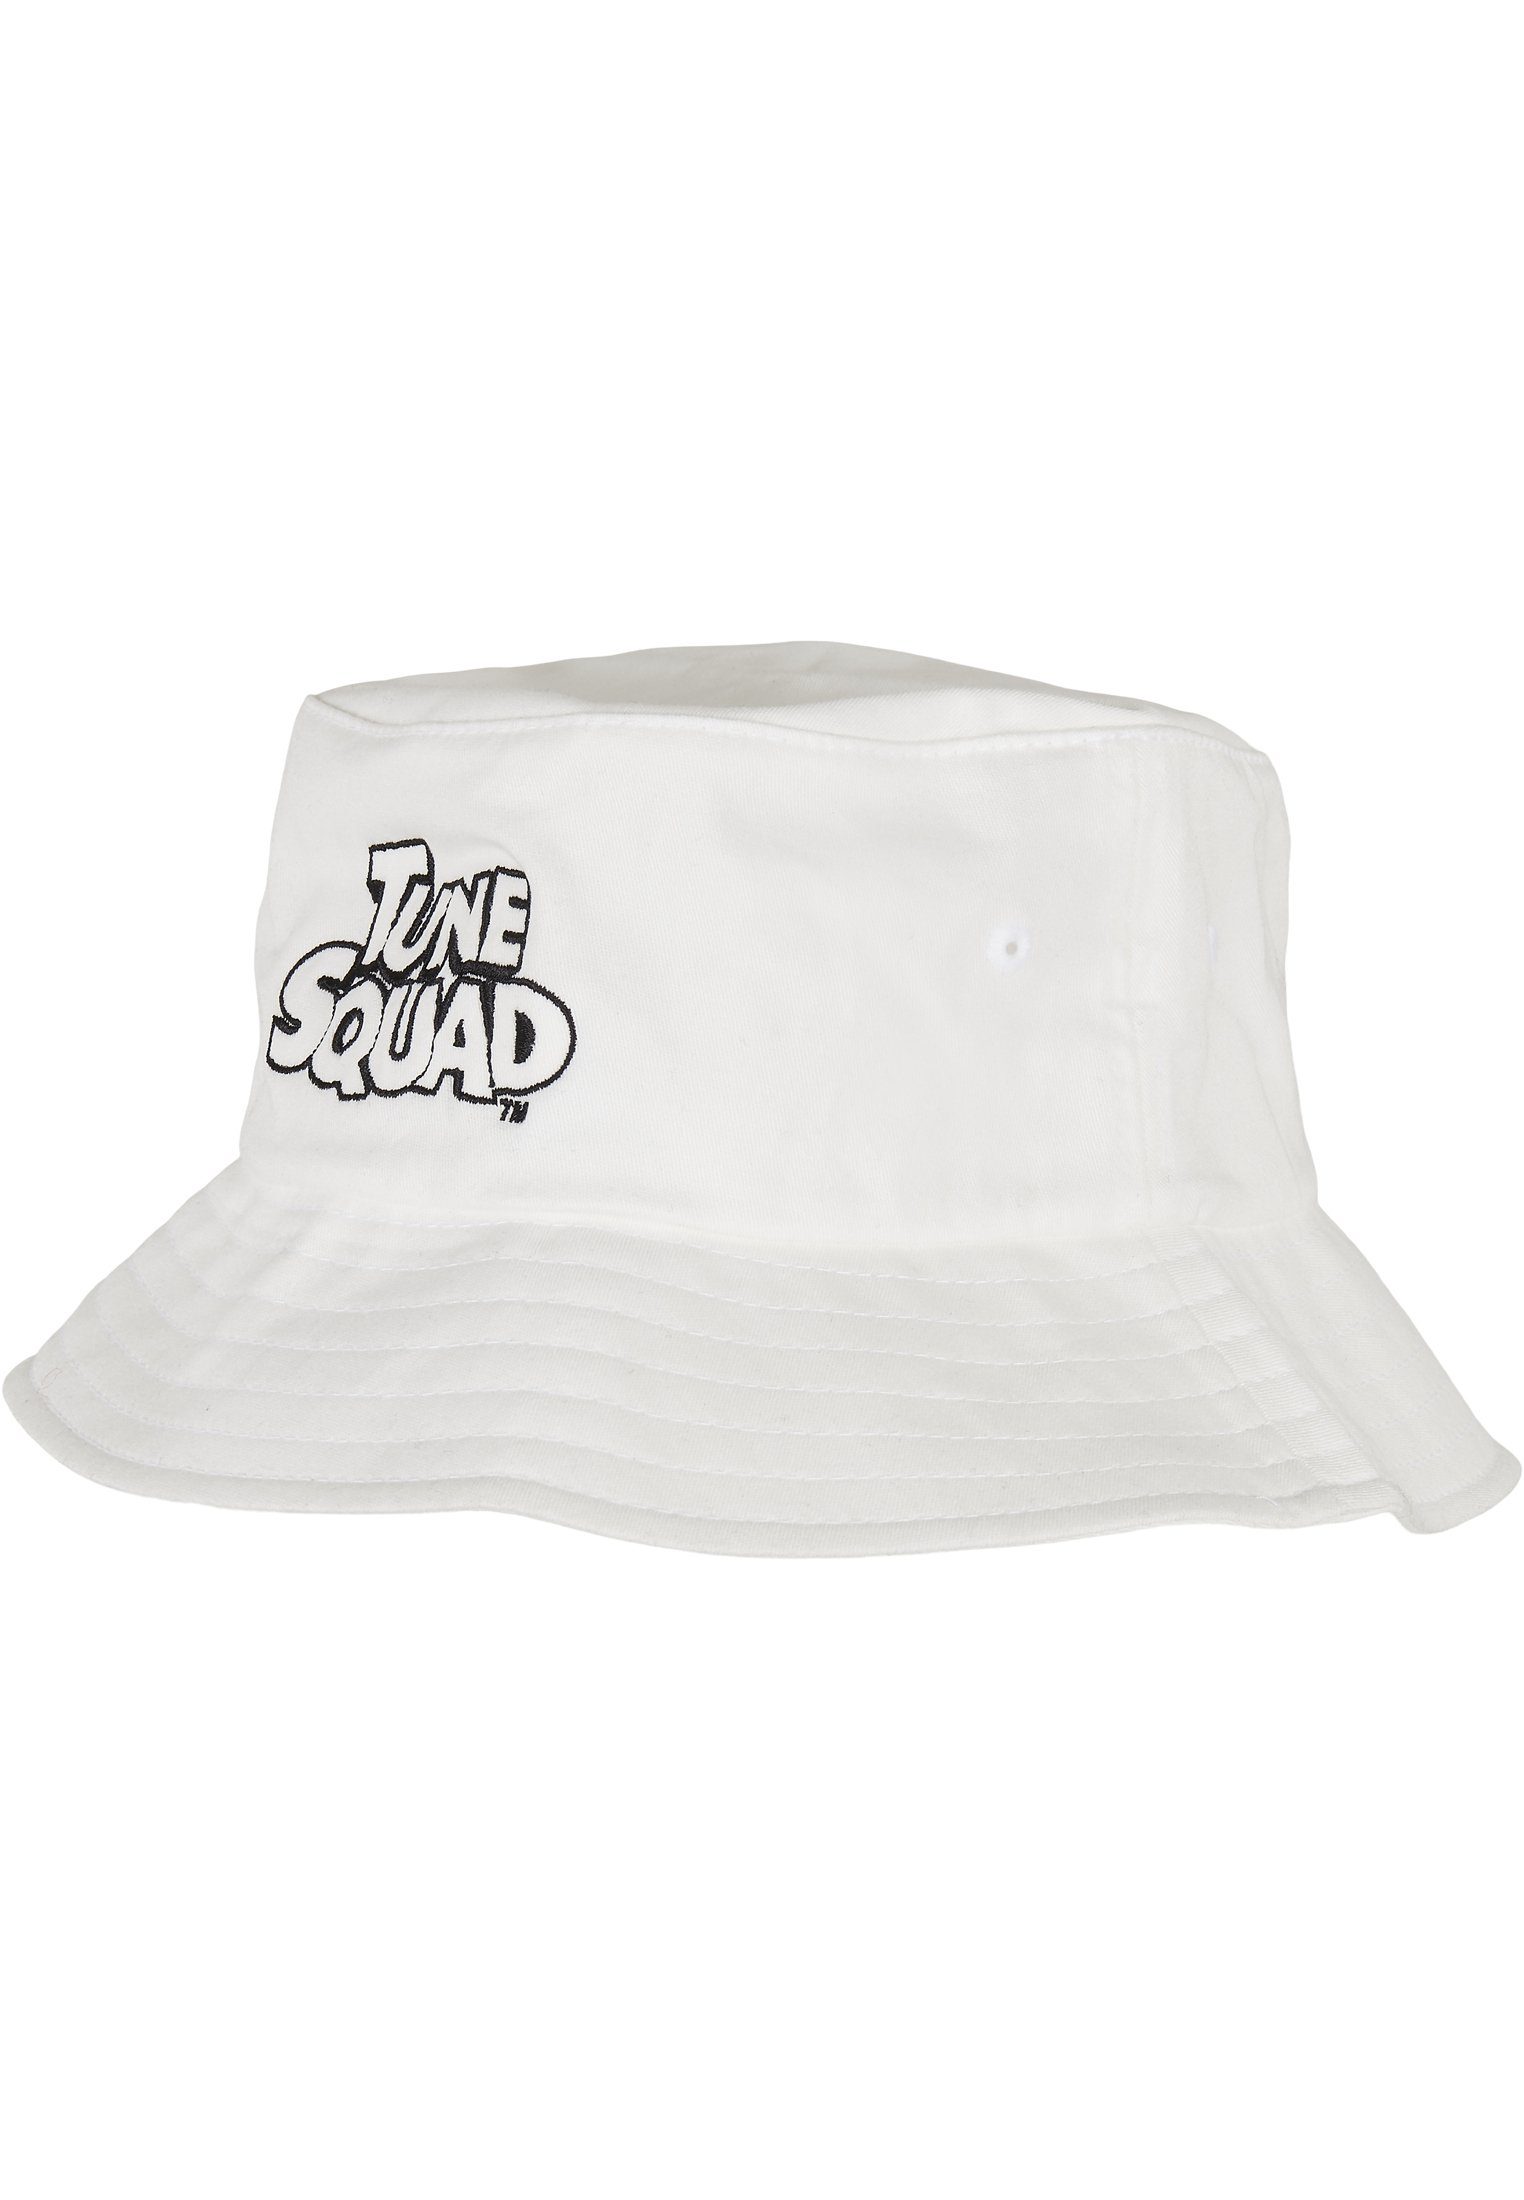 Bucket MisterTee Bucket Hat Cap Hat Squad Tune Flex Wording